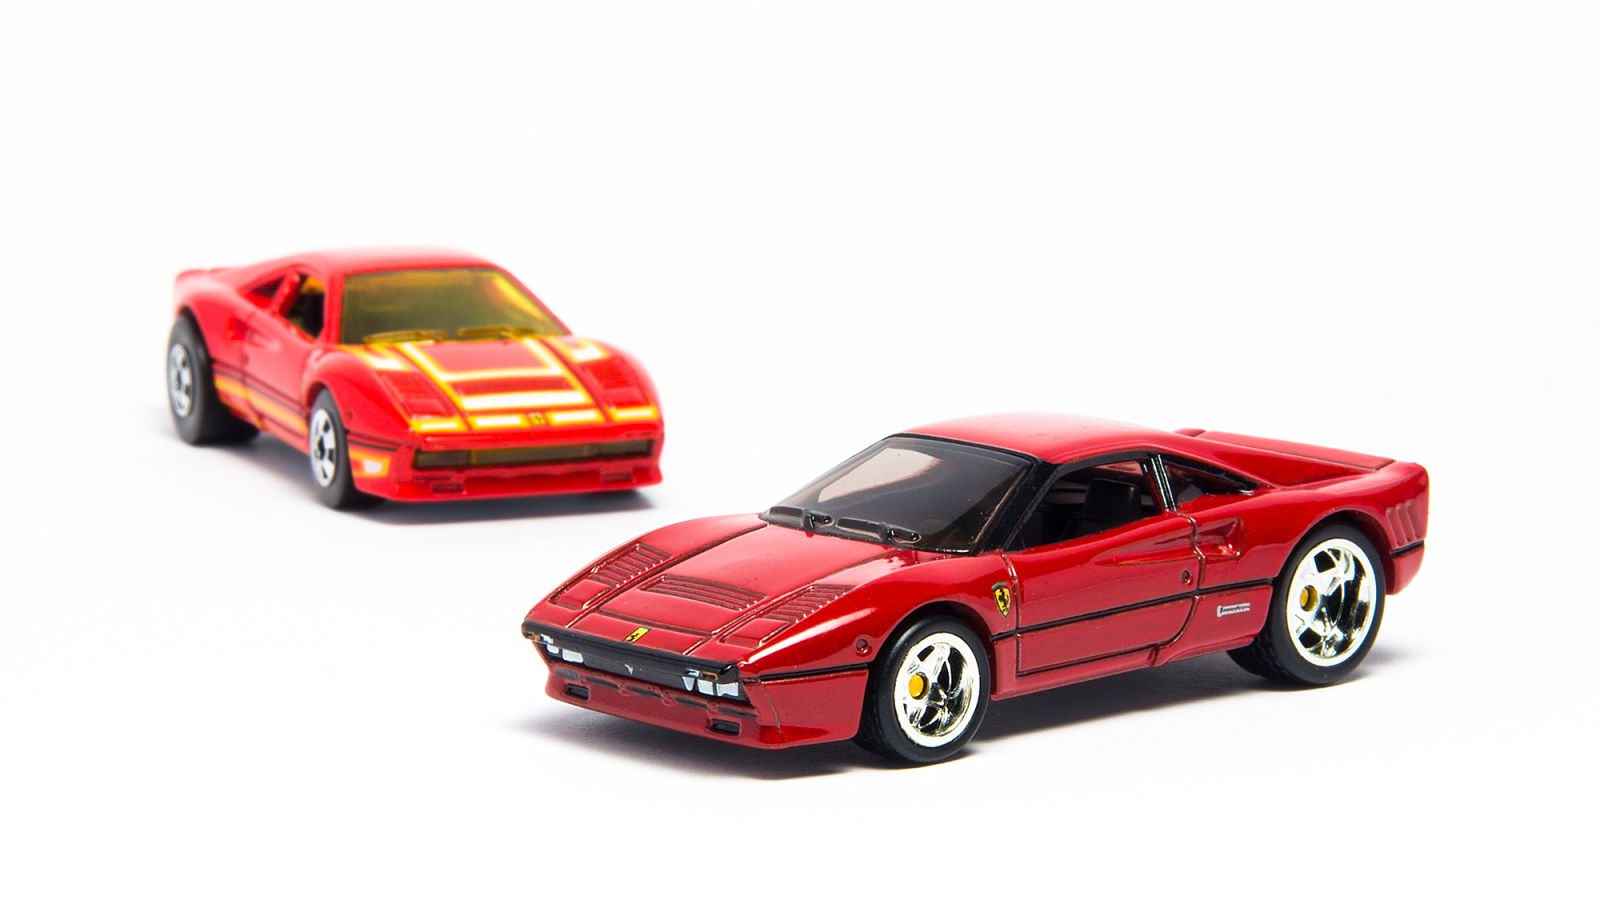 Illustration for article titled Ferrari Friday - 288 GTO